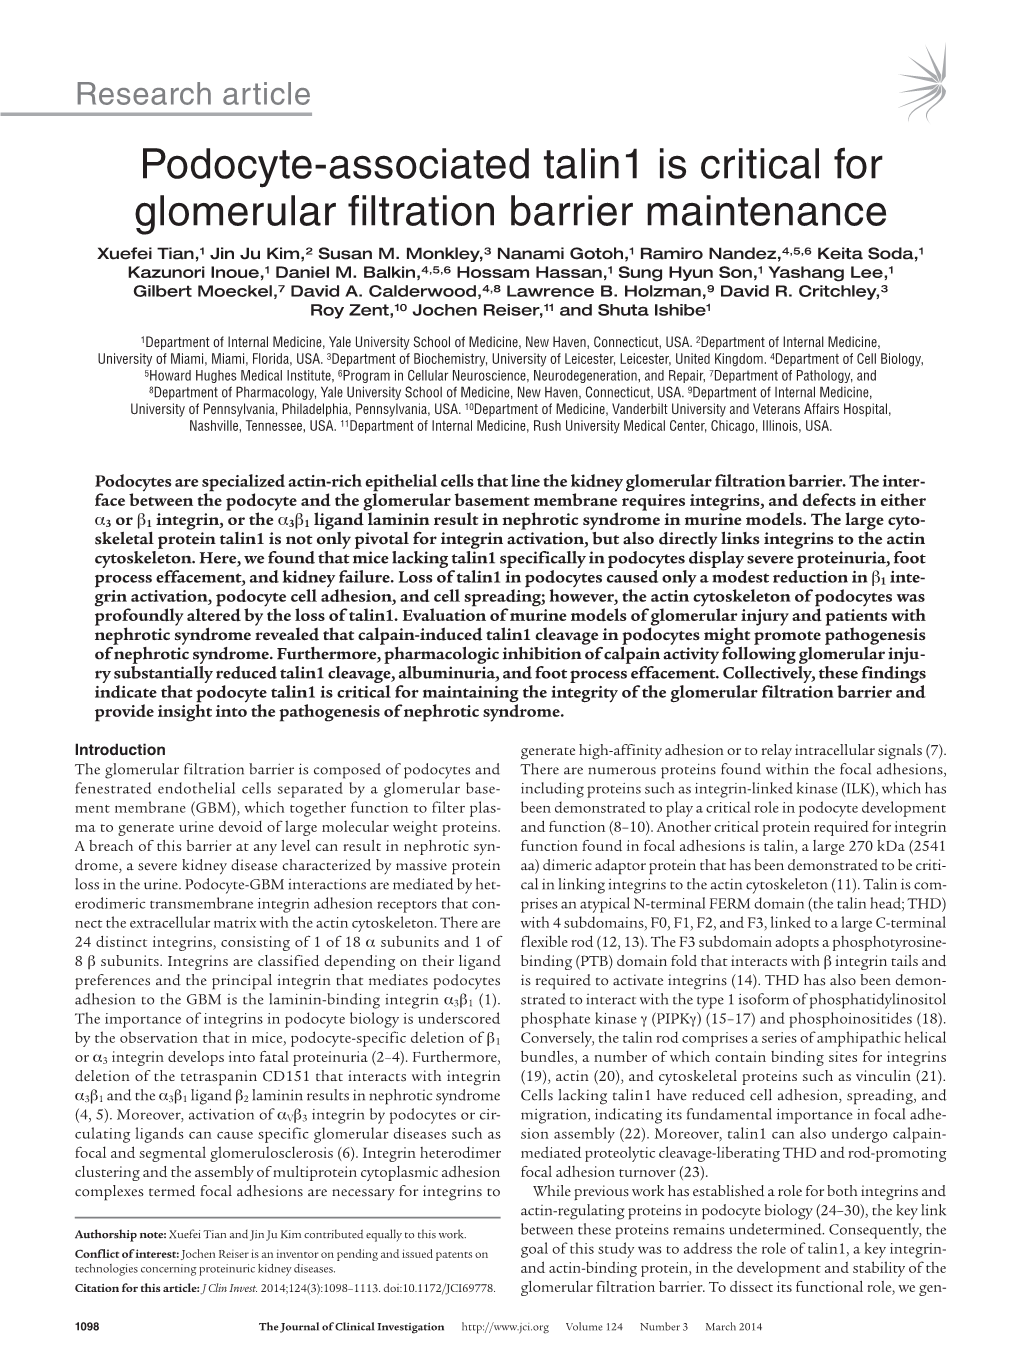 Podocyte-Associated Talin1 Is Critical for Glomerular Filtration Barrier Maintenance Xuefei Tian,1 Jin Ju Kim,2 Susan M